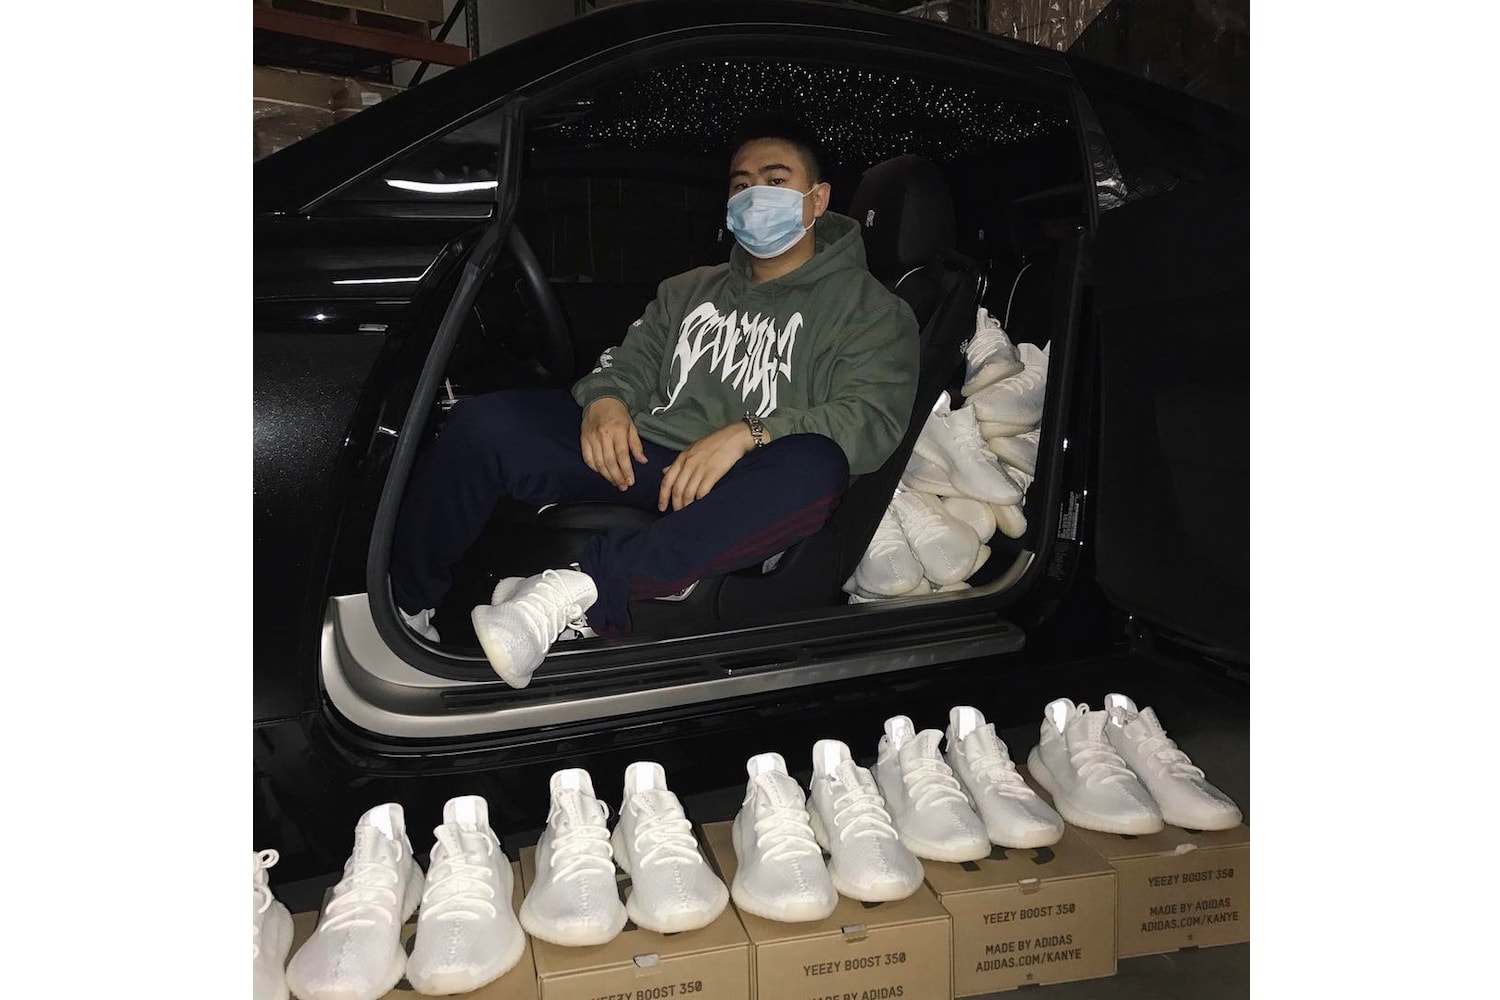 華裔鞋販 Allen Kuo 再度曬出大量未正式上架的 YEEZY BOOST 350 V2「Cream White」